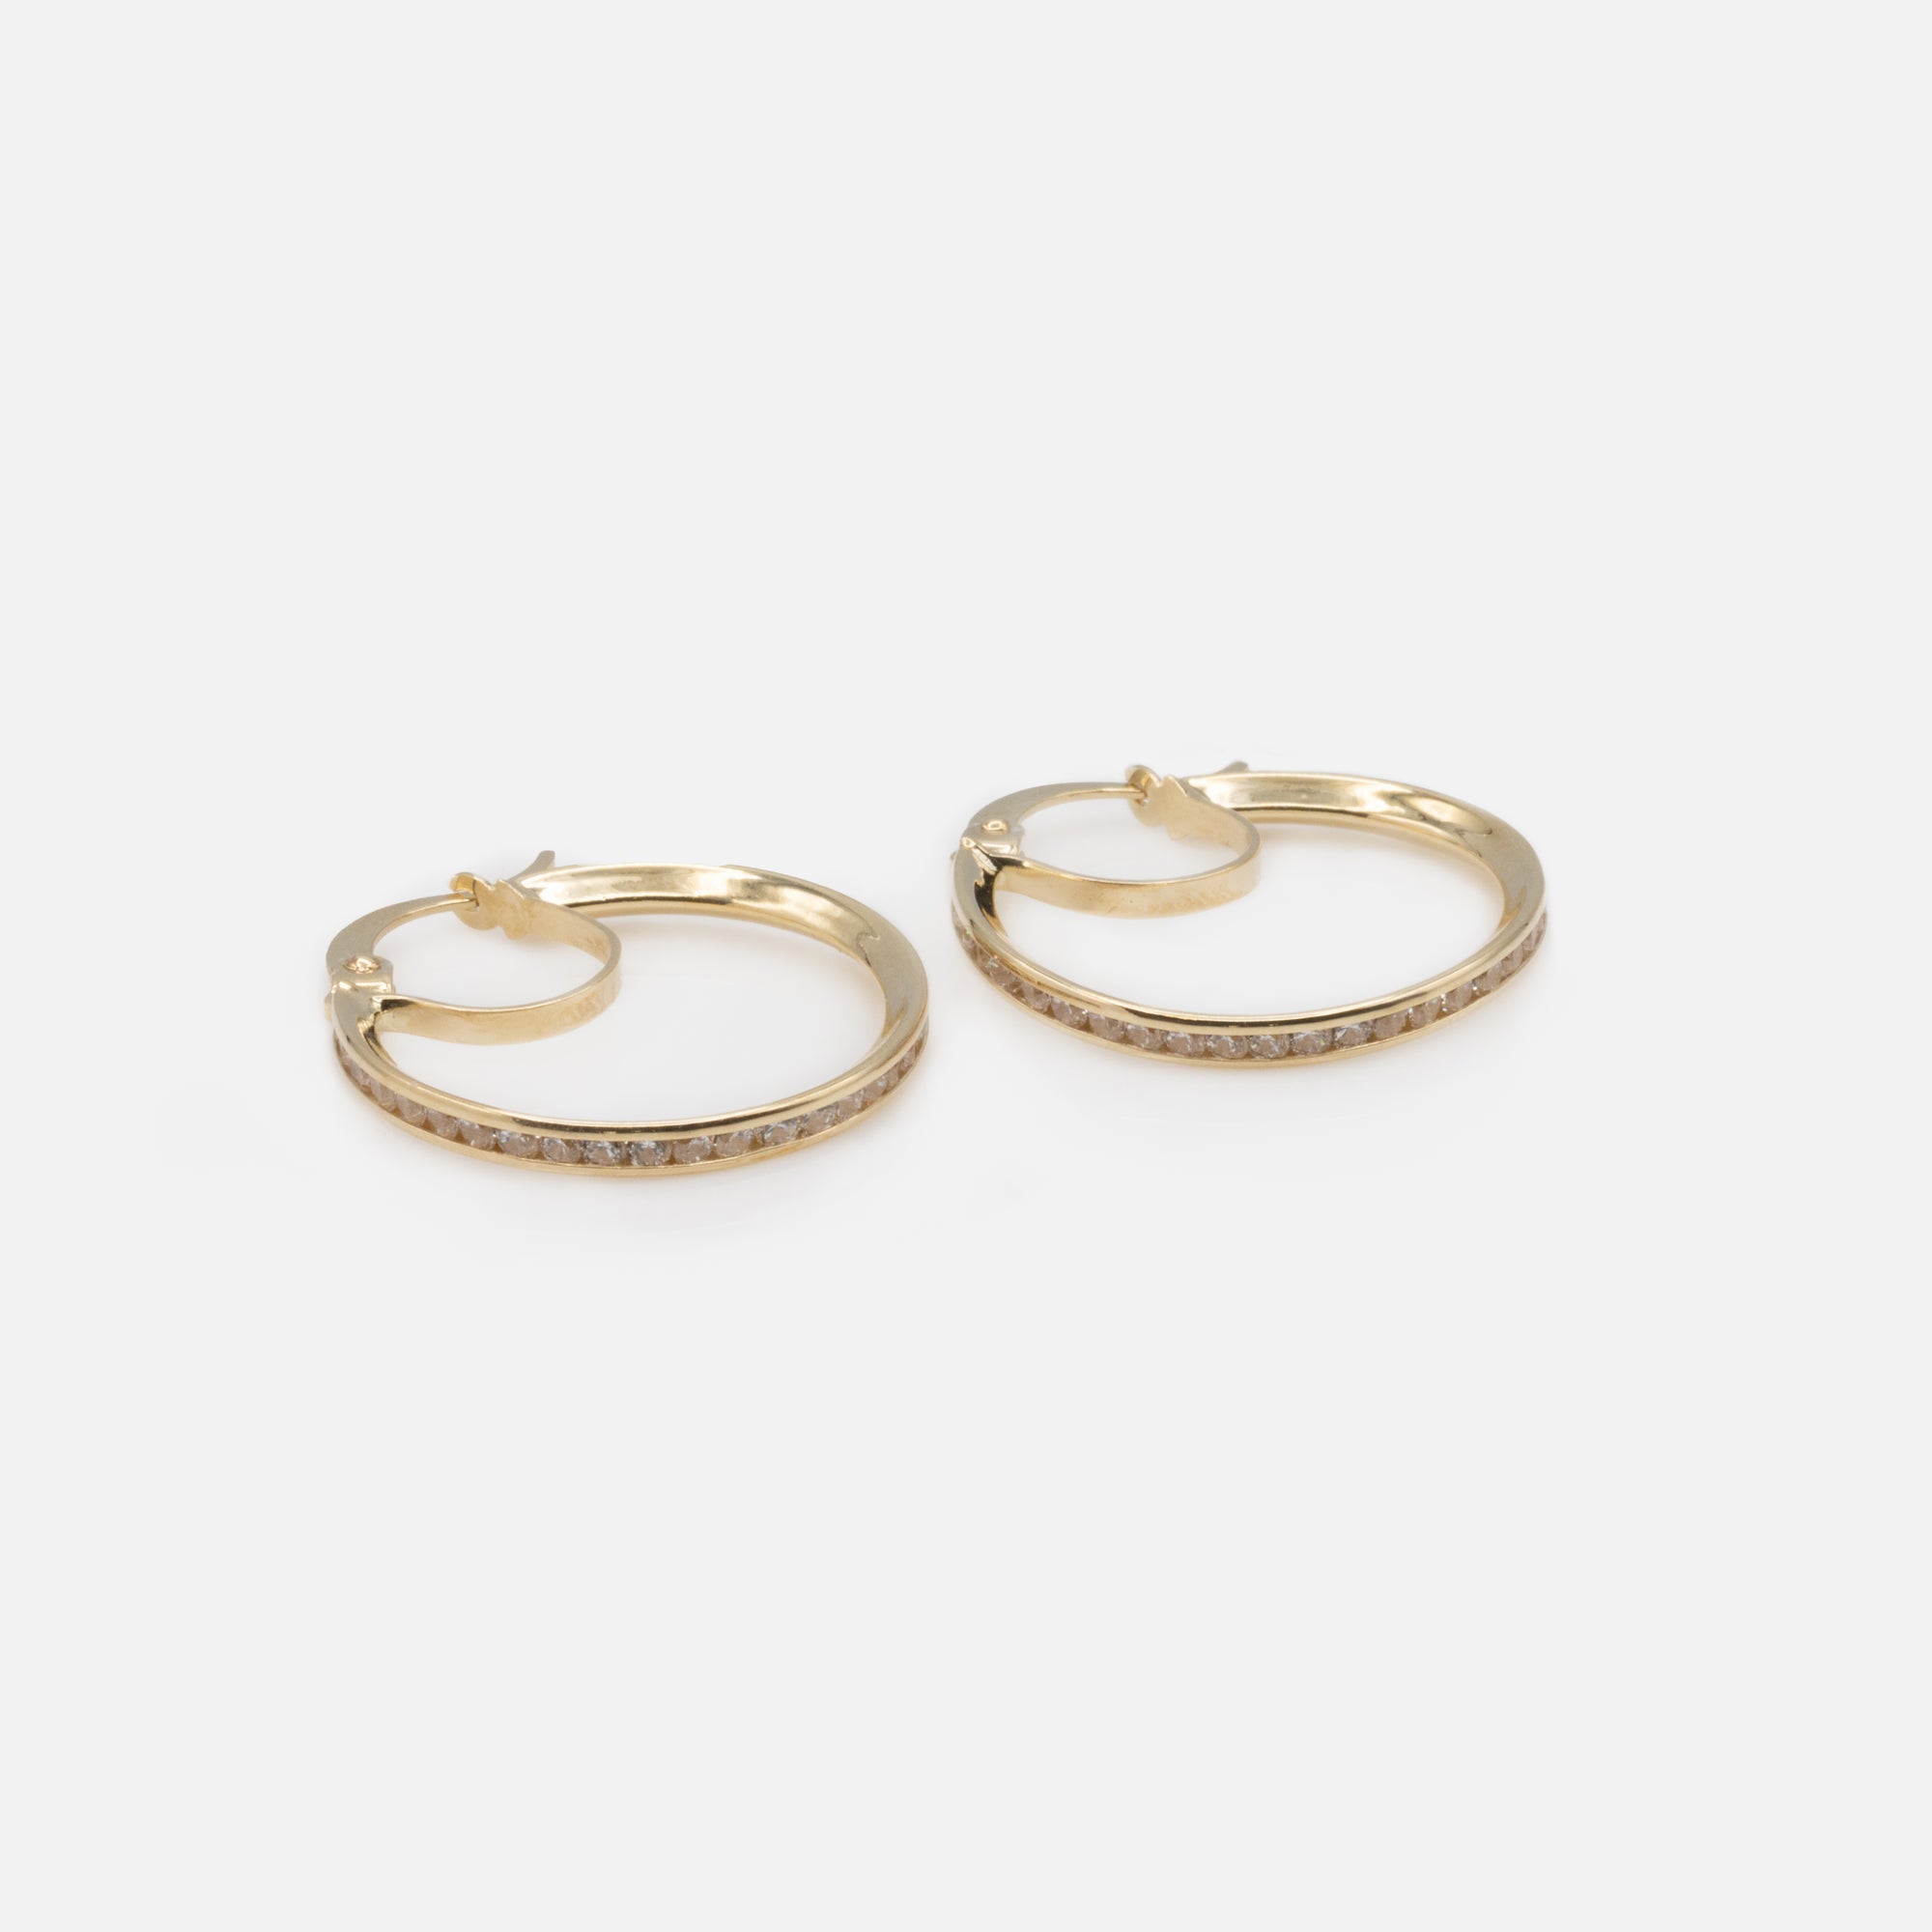 10K or 14K Gold Halo Round Earrings, 0.5 to 3 carat Cubic Zirconia – Kiera  NY Jewelry